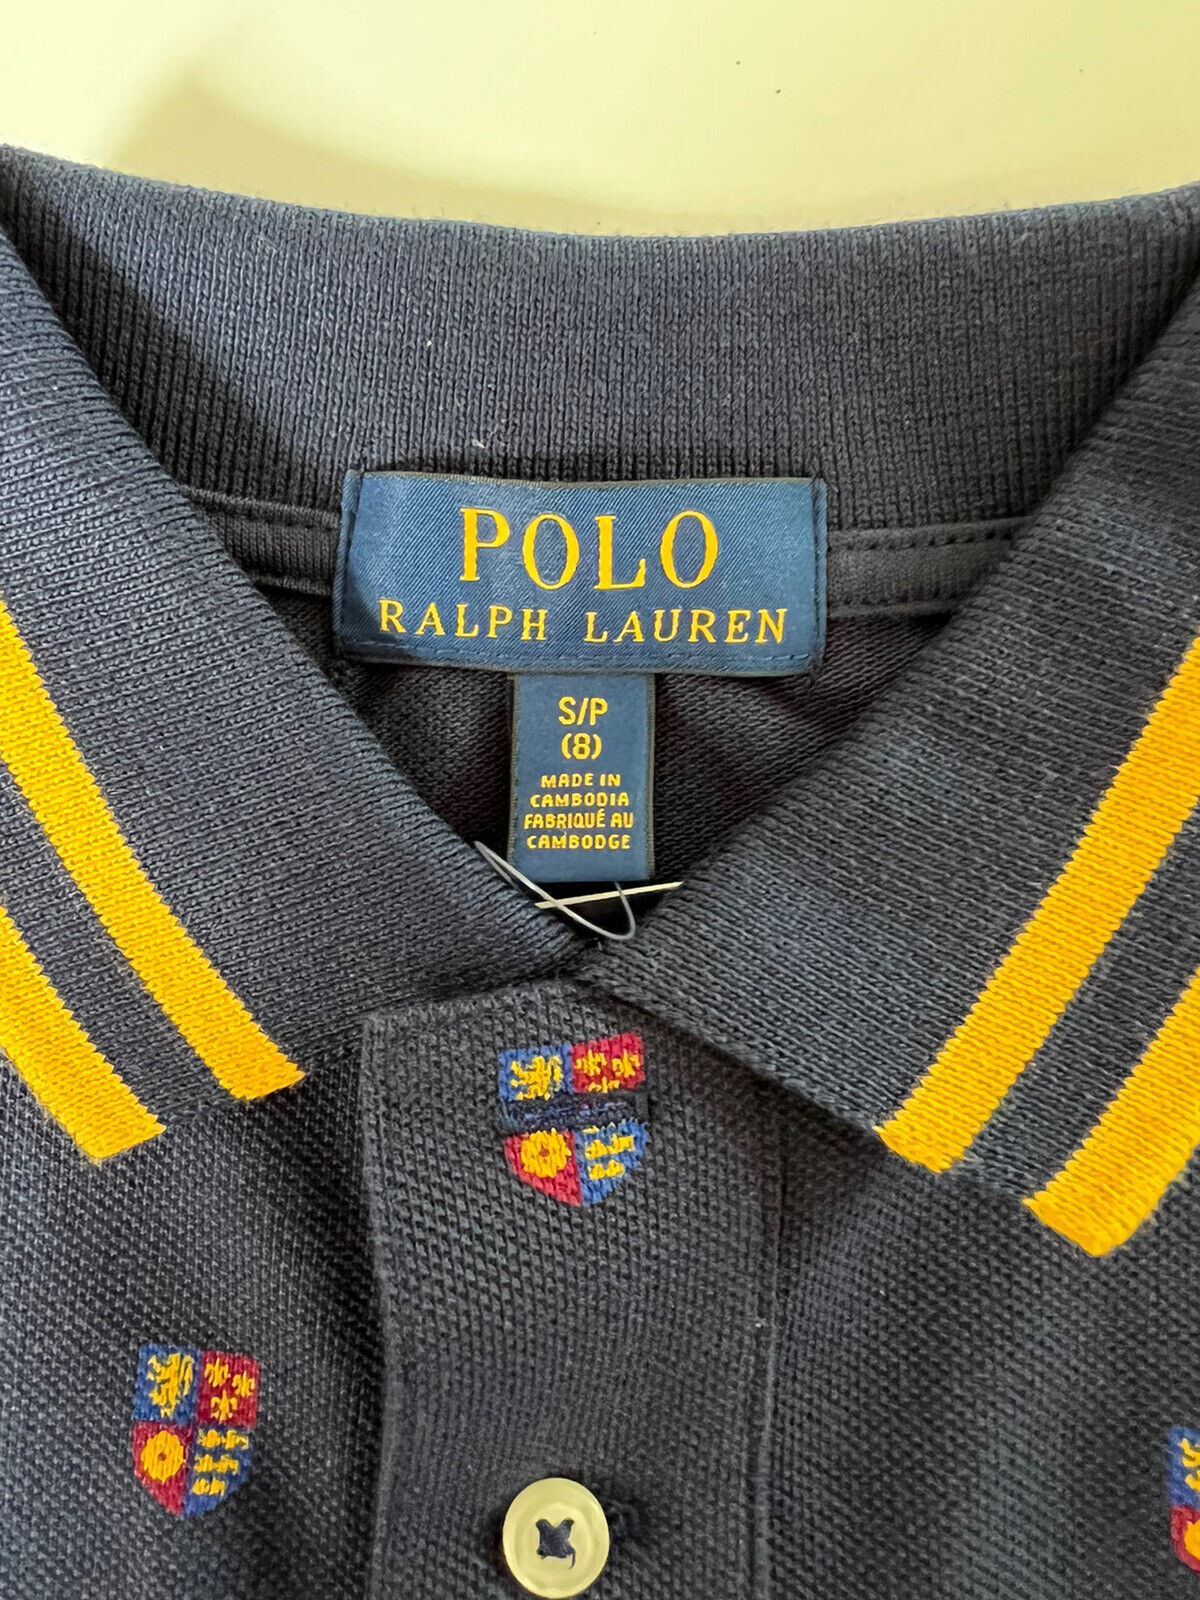 NWT Polo Ralph Lauren Boy's Polo Shirt Blue Small (8)